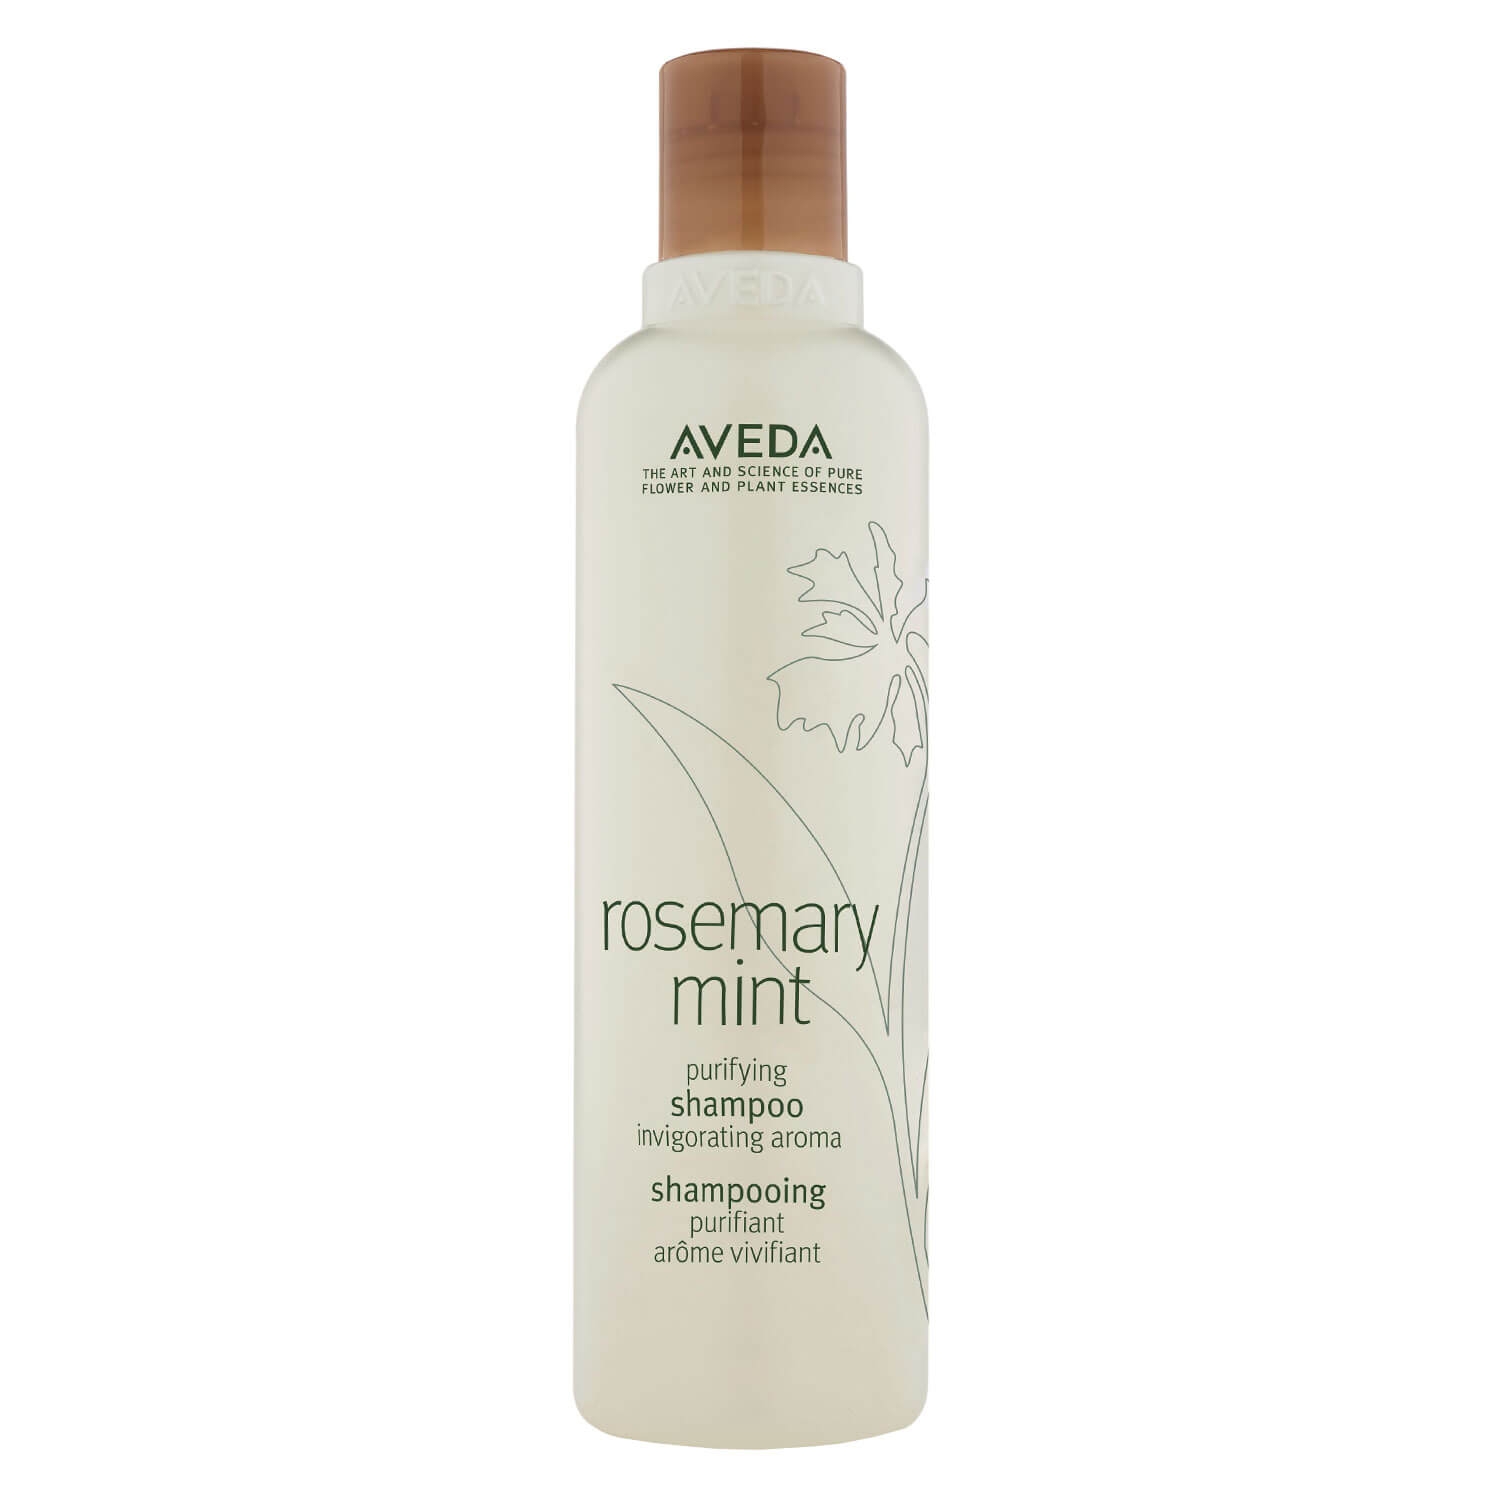 Produktbild von rosemary mint - purifying shampoo